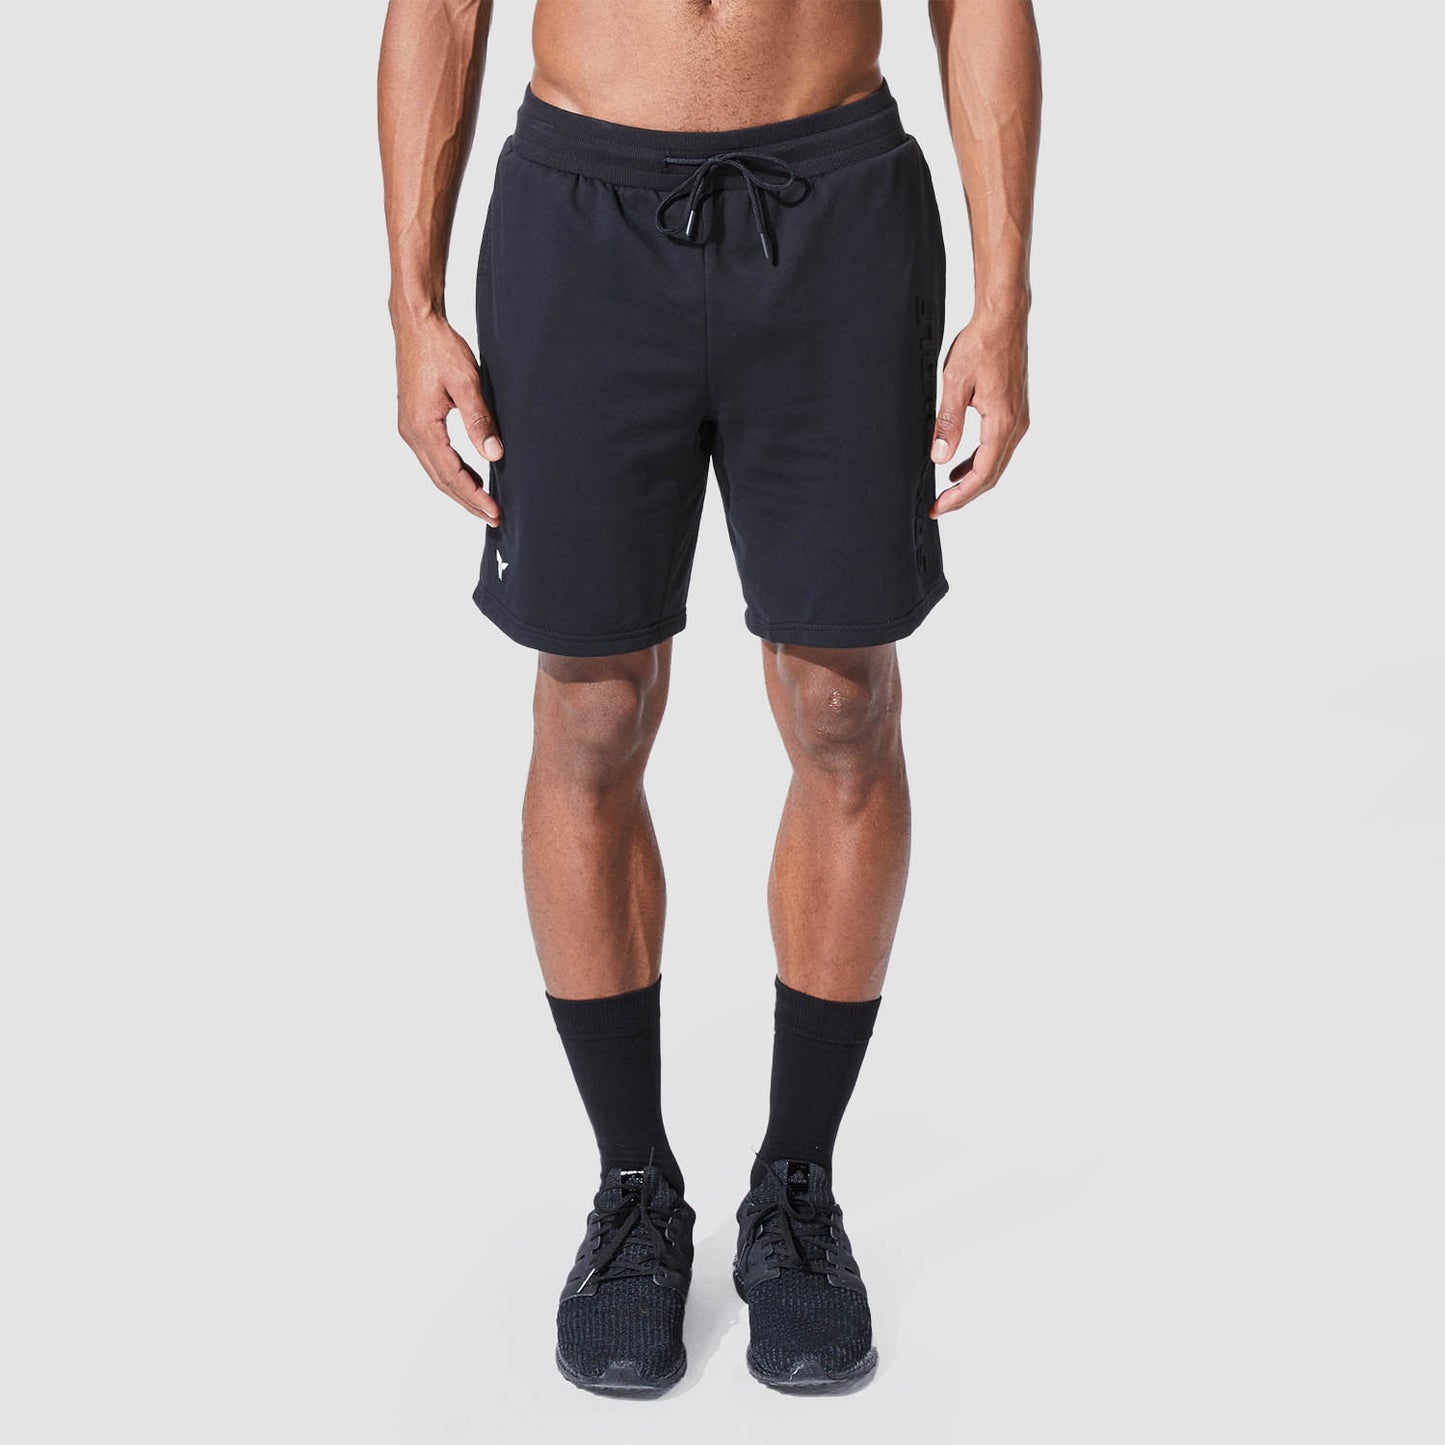 squatwolf-gym-wear-graphic-wordmark-jogger-shorts-black-workout-shorts-for-men